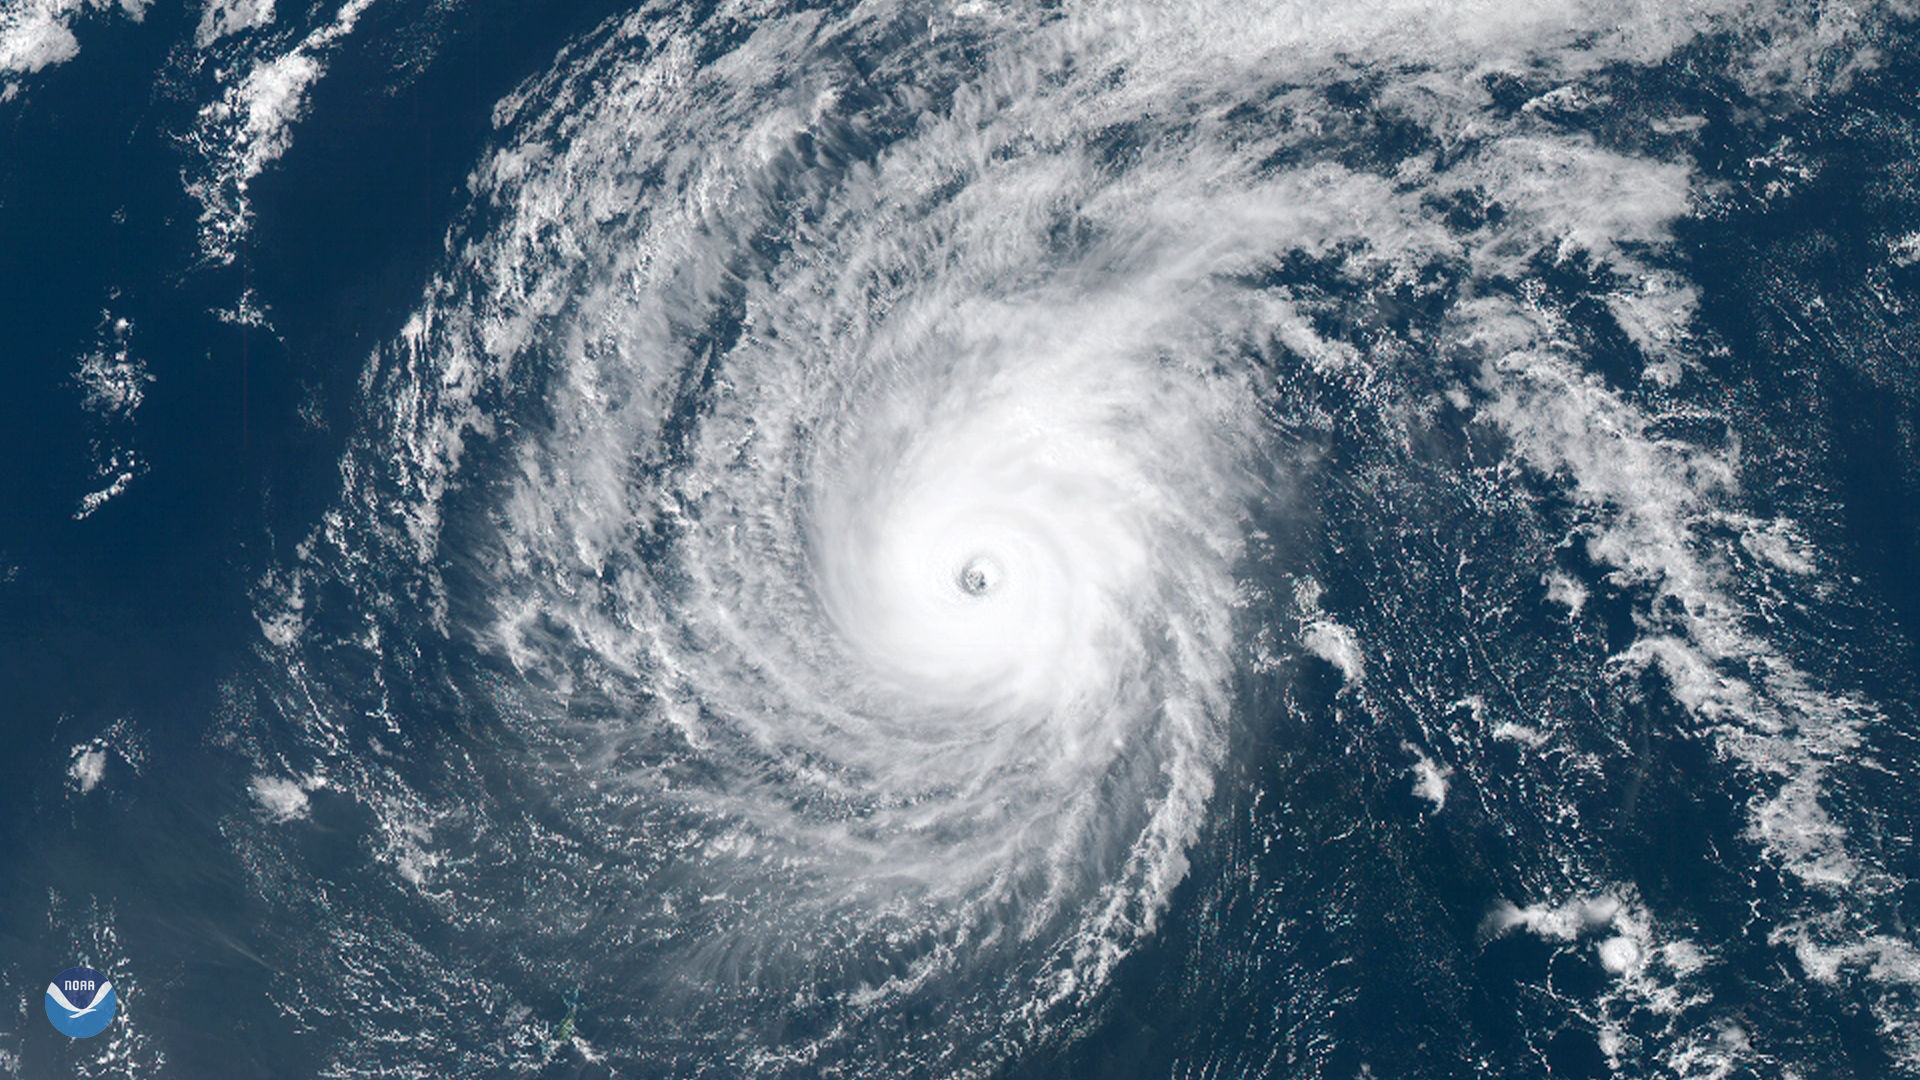 Typhoon Wutip churns through the Pacific